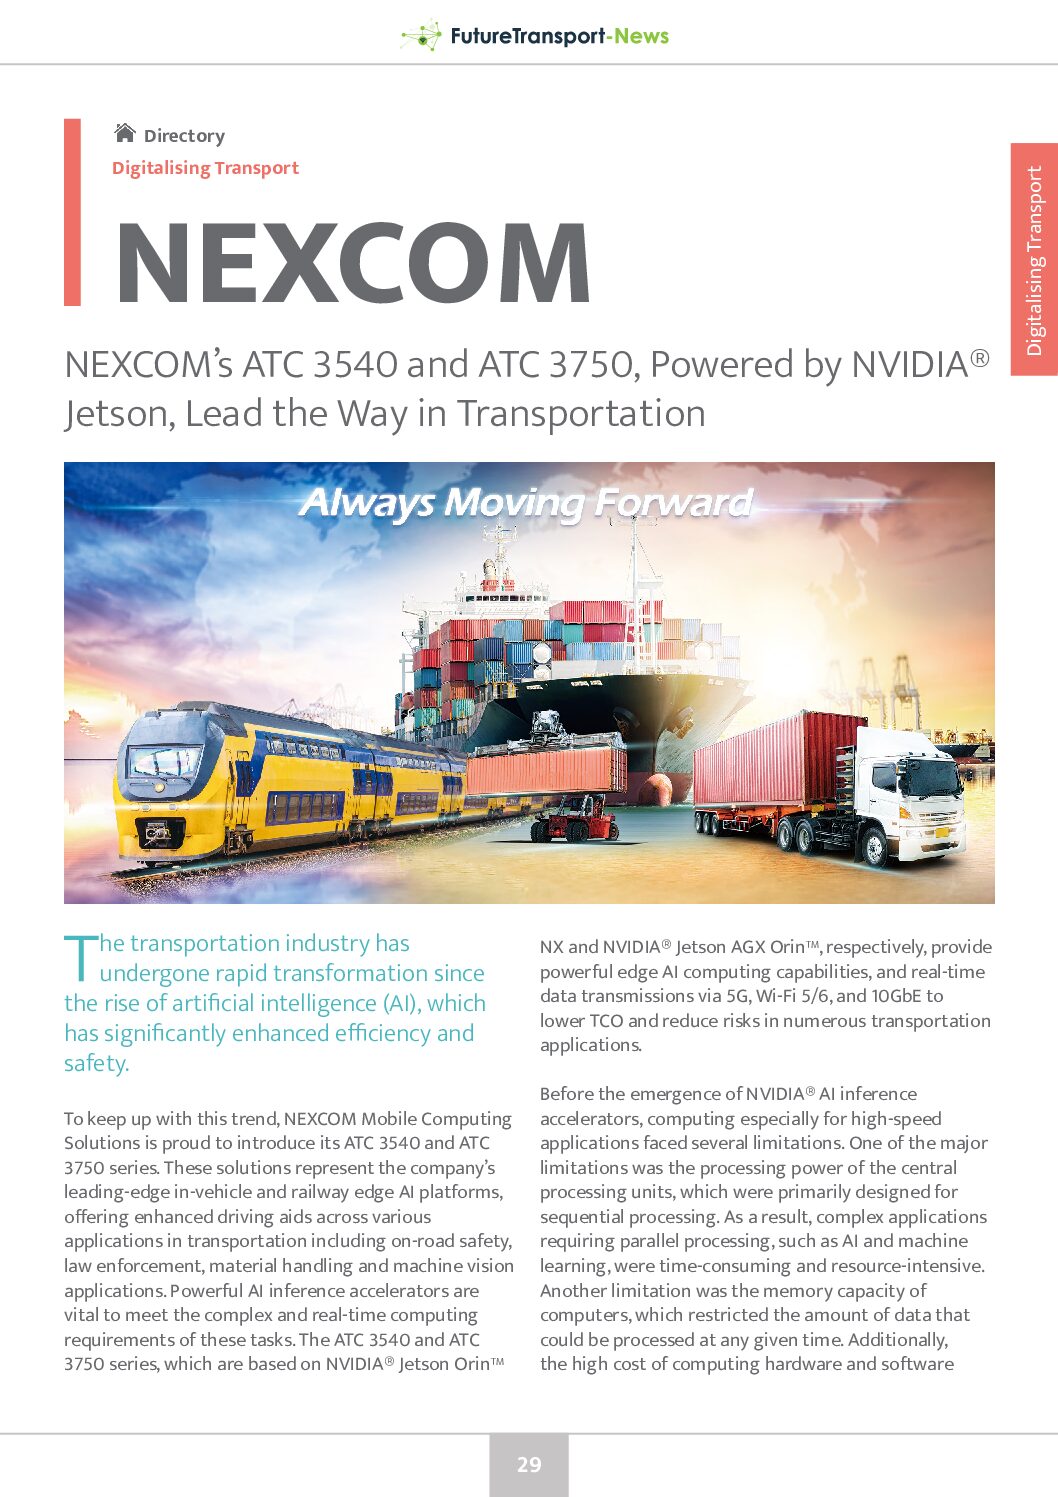 NEXCOM’s ATC 3540 and ATC 3750 Lead the Way in Transportation